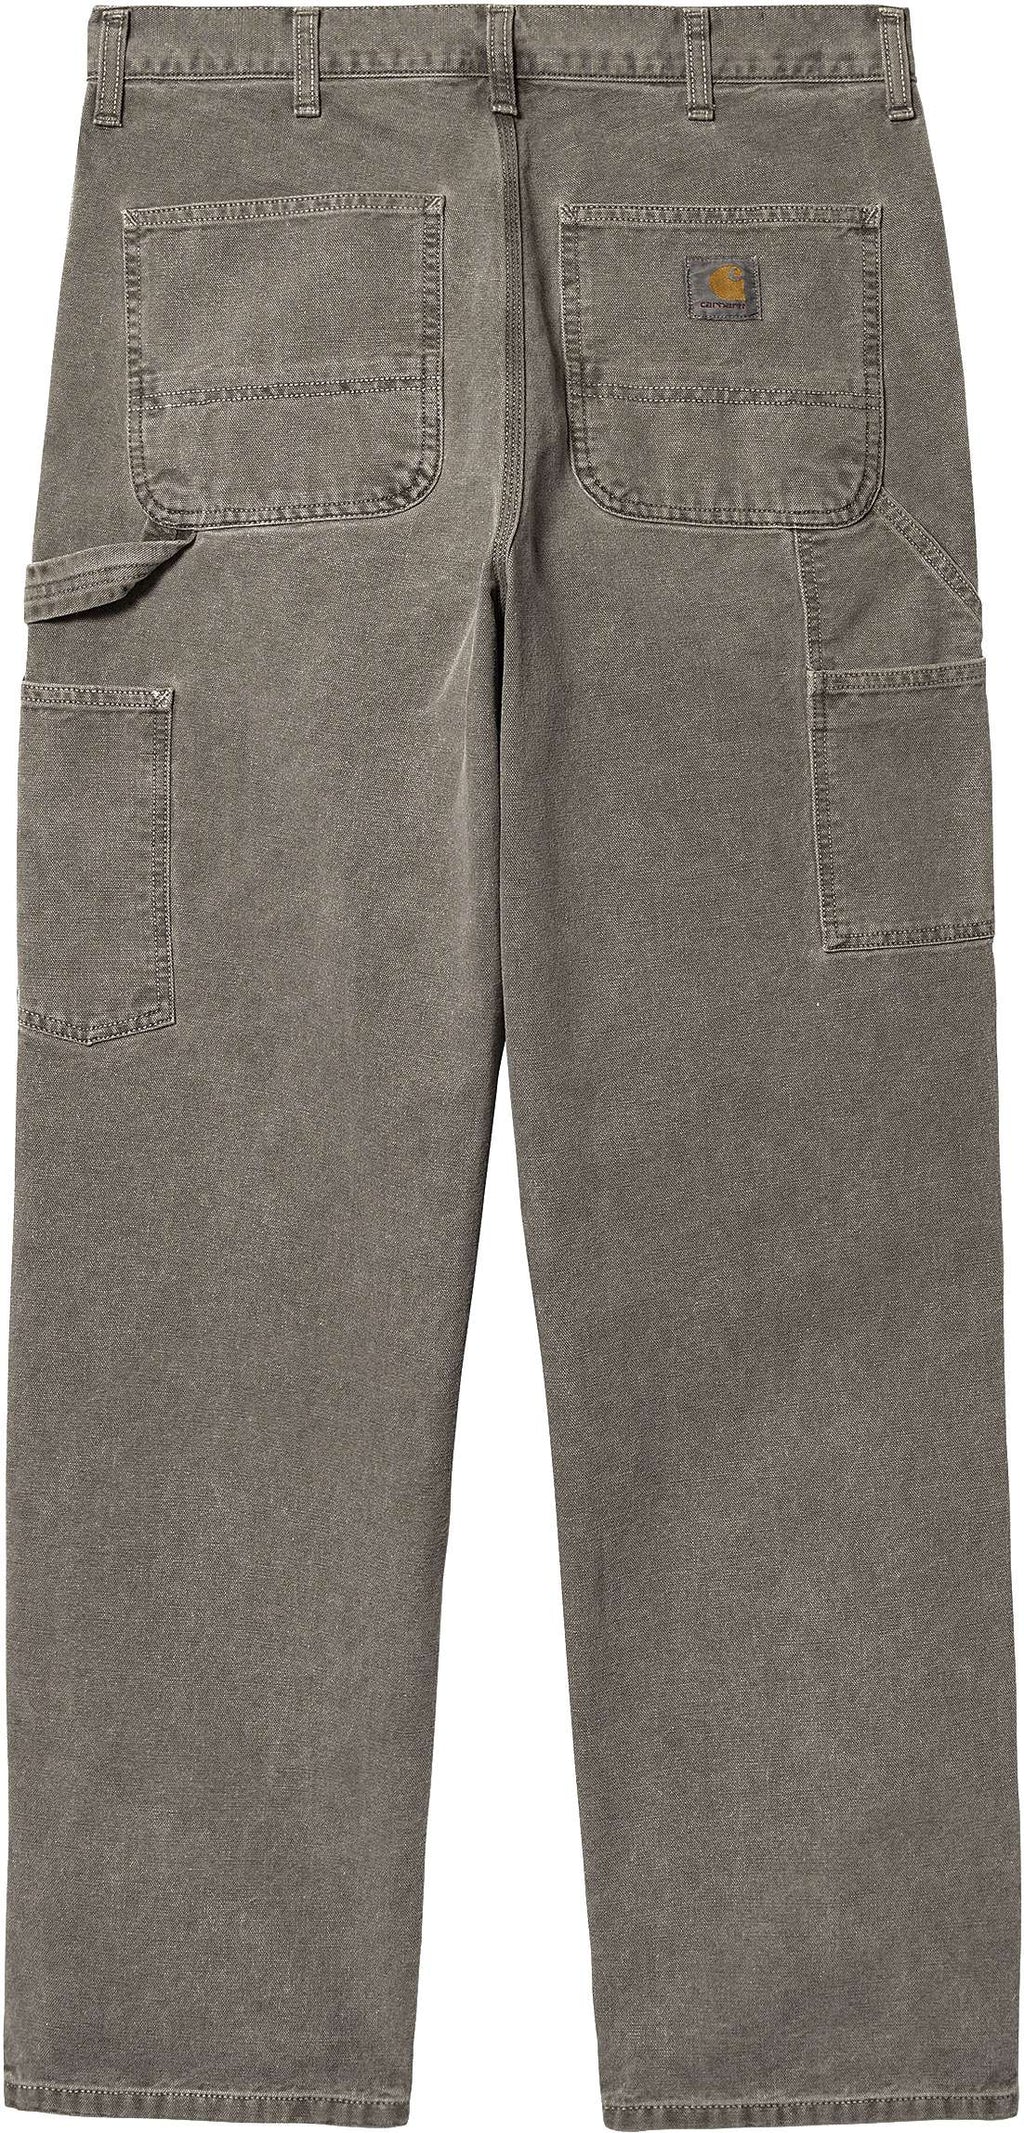  Carhartt Wip Pantaloni Jeans Single Knee Pant Black Faded Nero Donna - 1